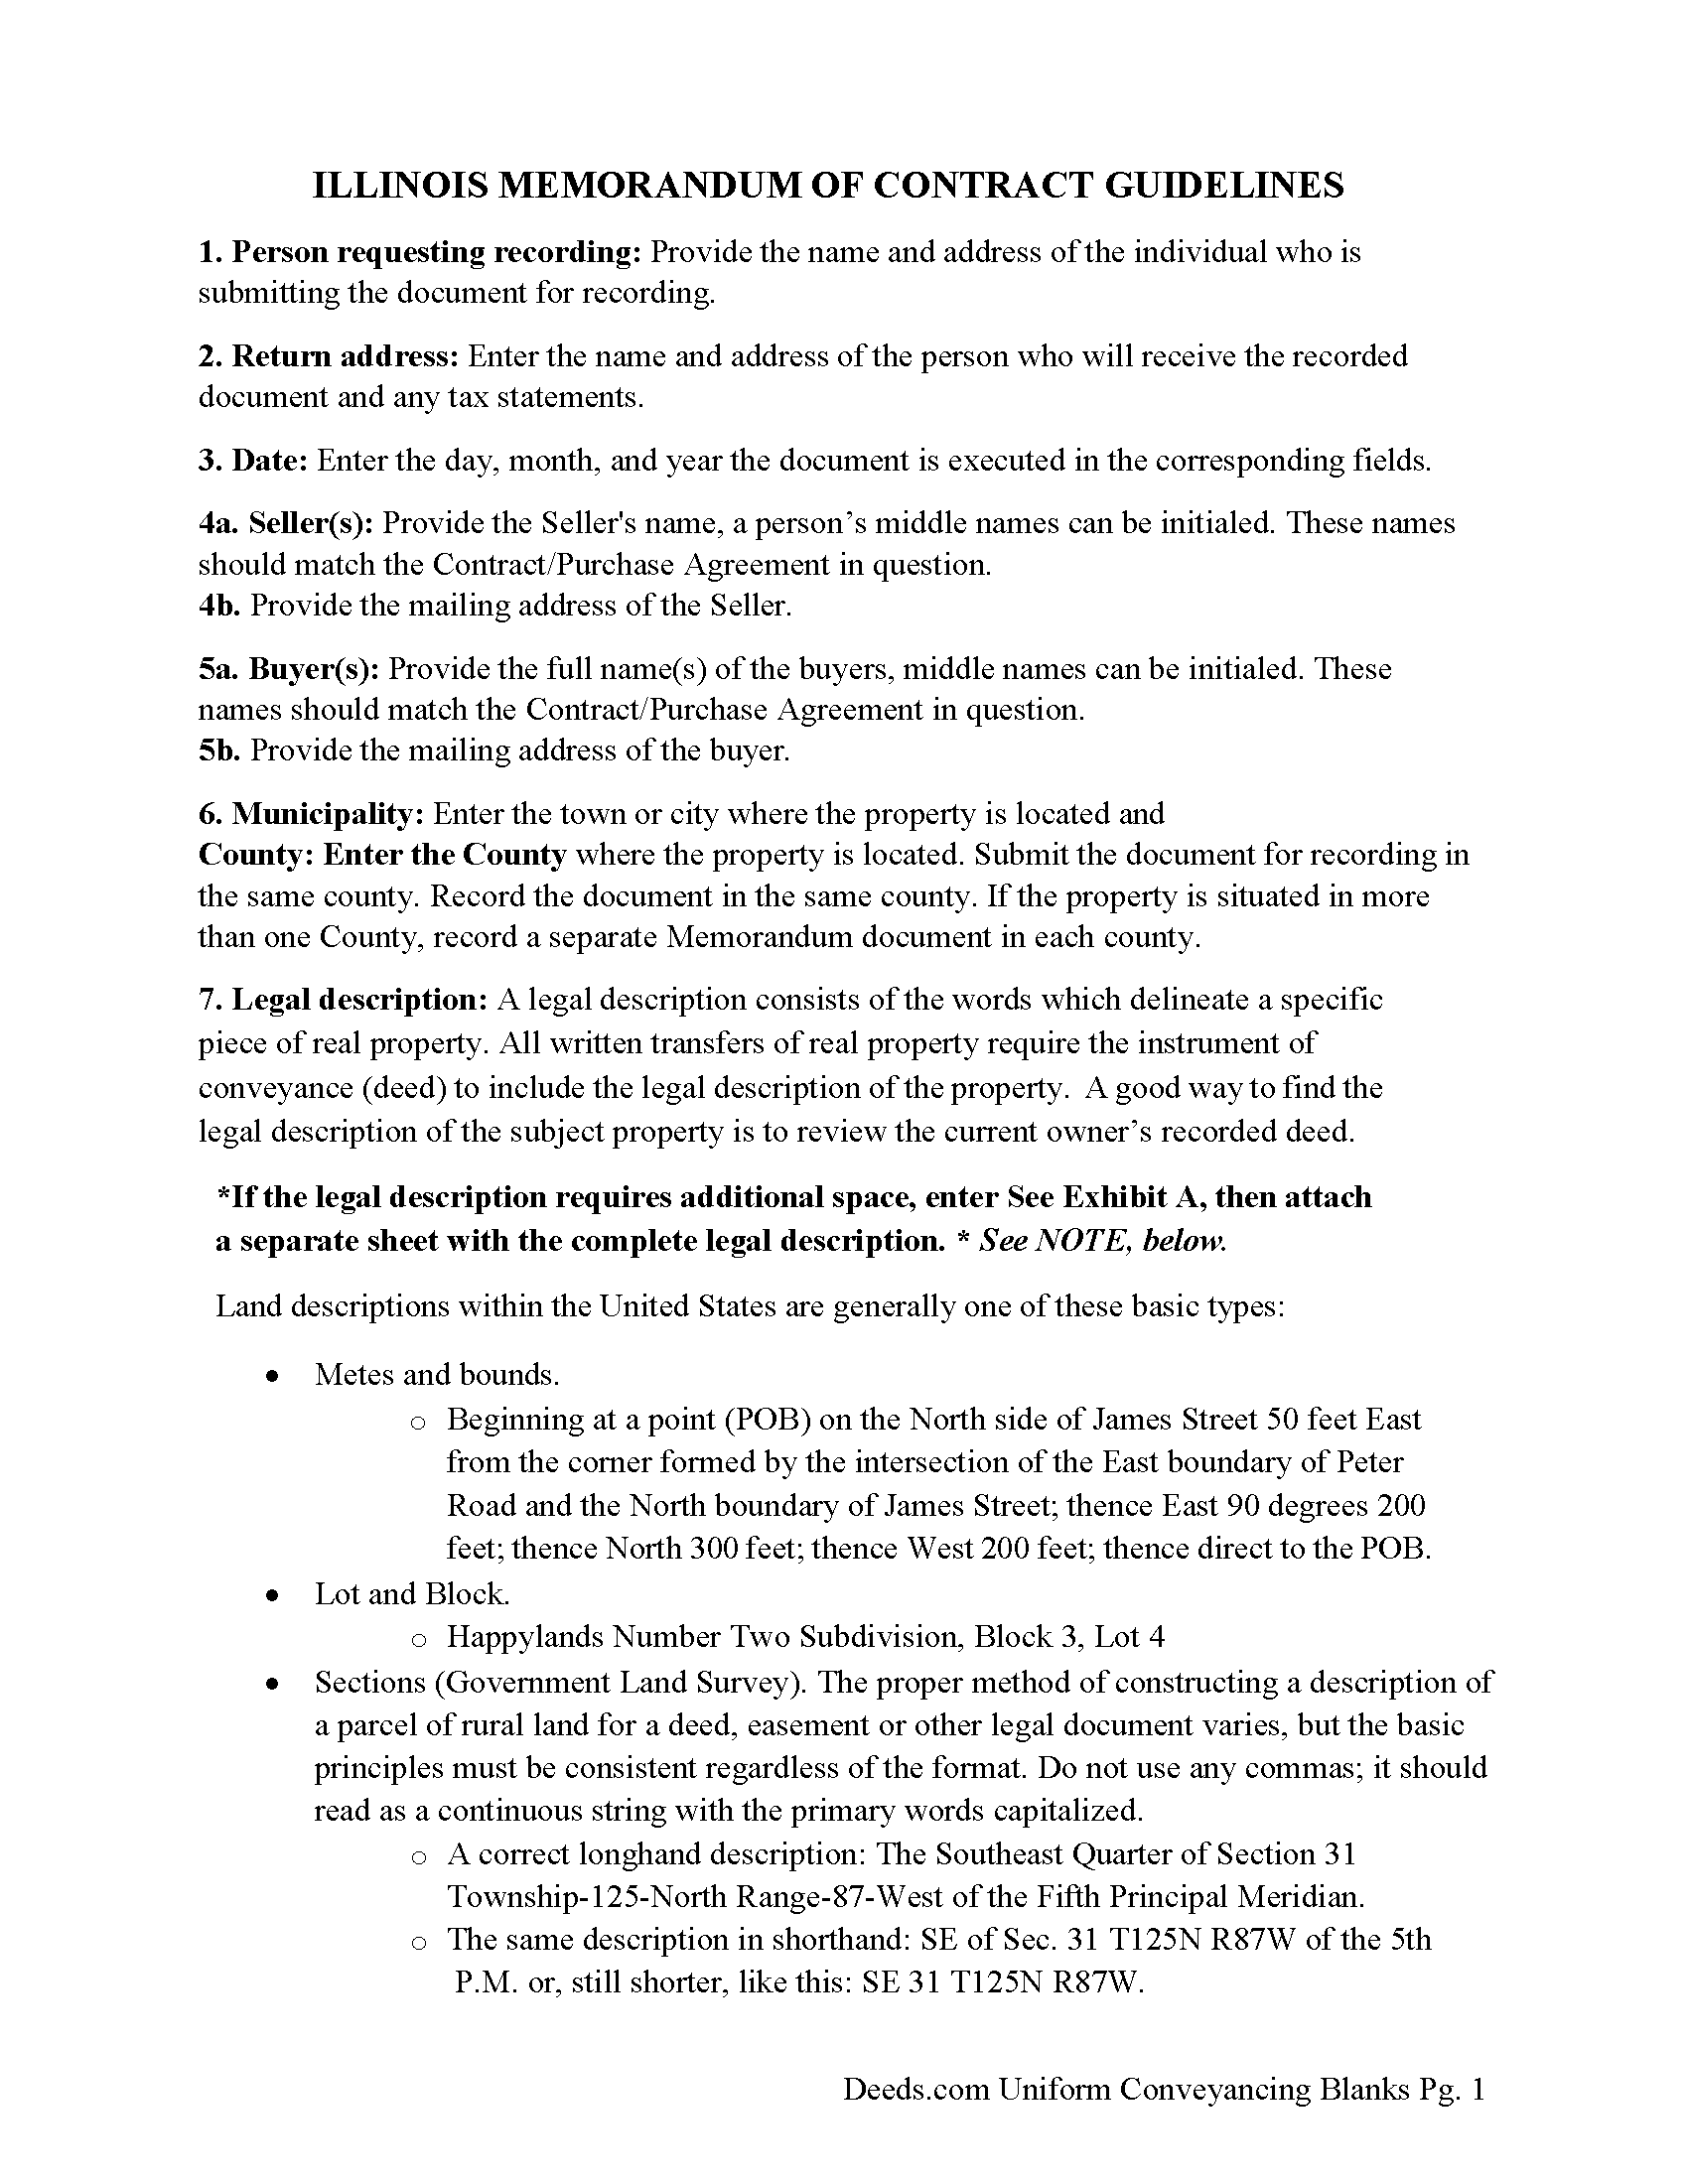 Clinton County Memorandum of an Installment Sales Contract Guide